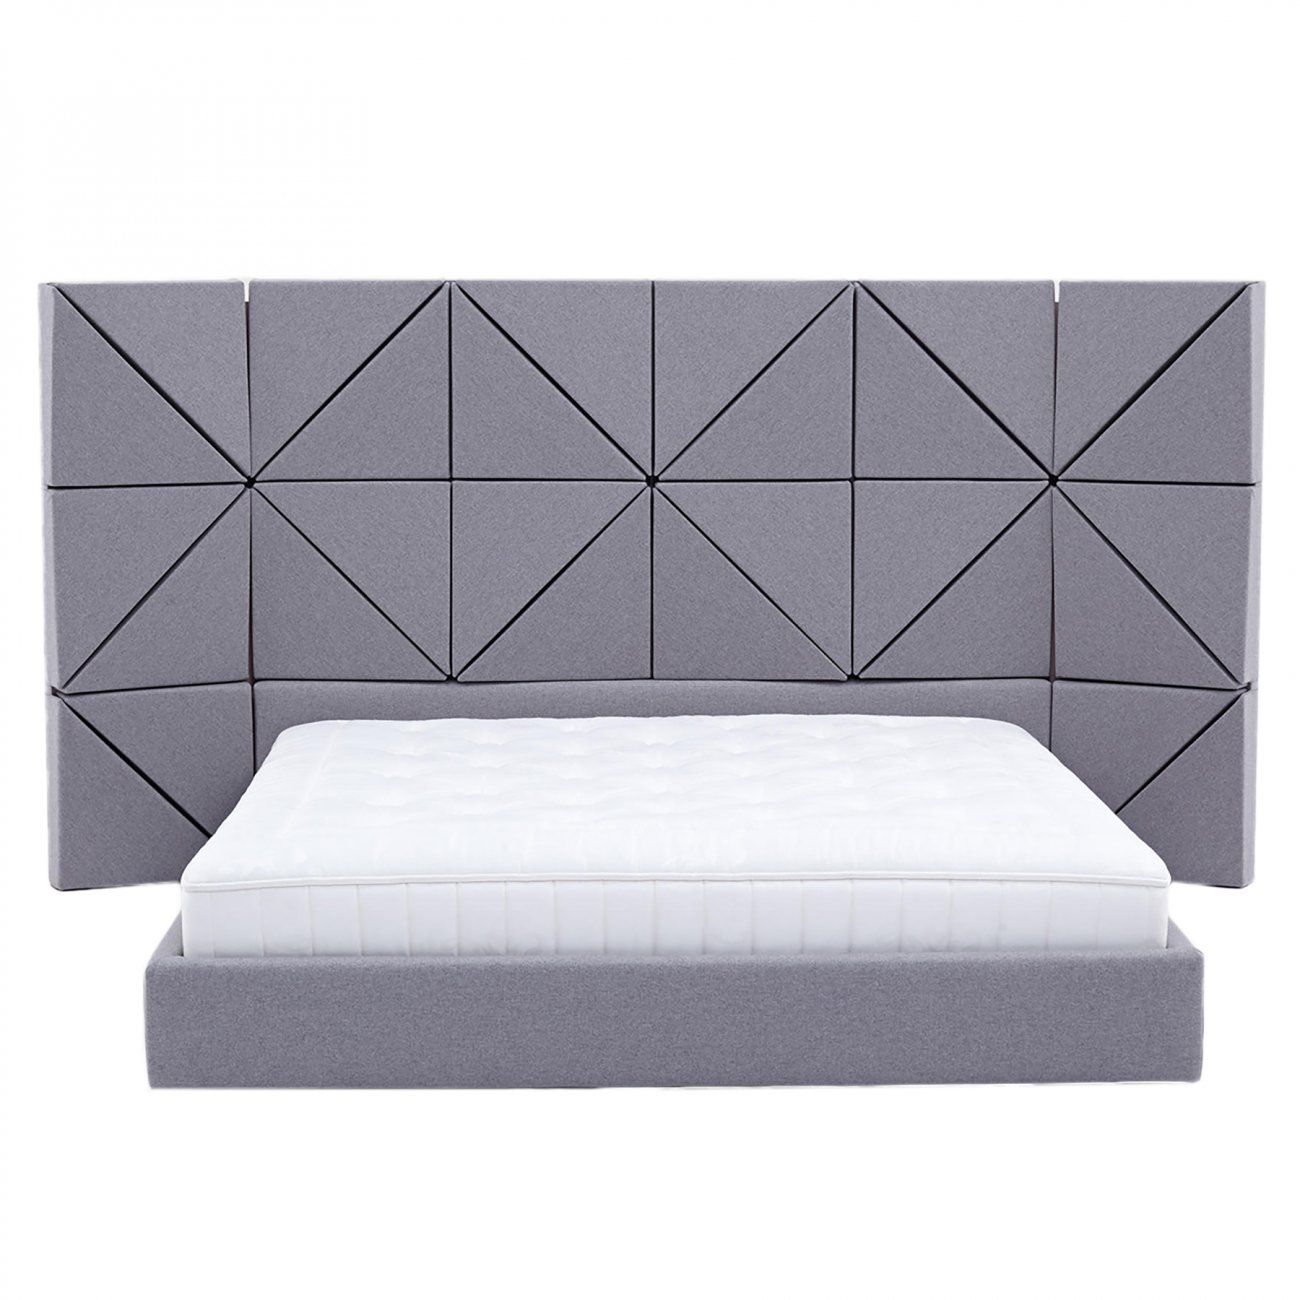 Double bed 160x200 purple Floe Comfortable